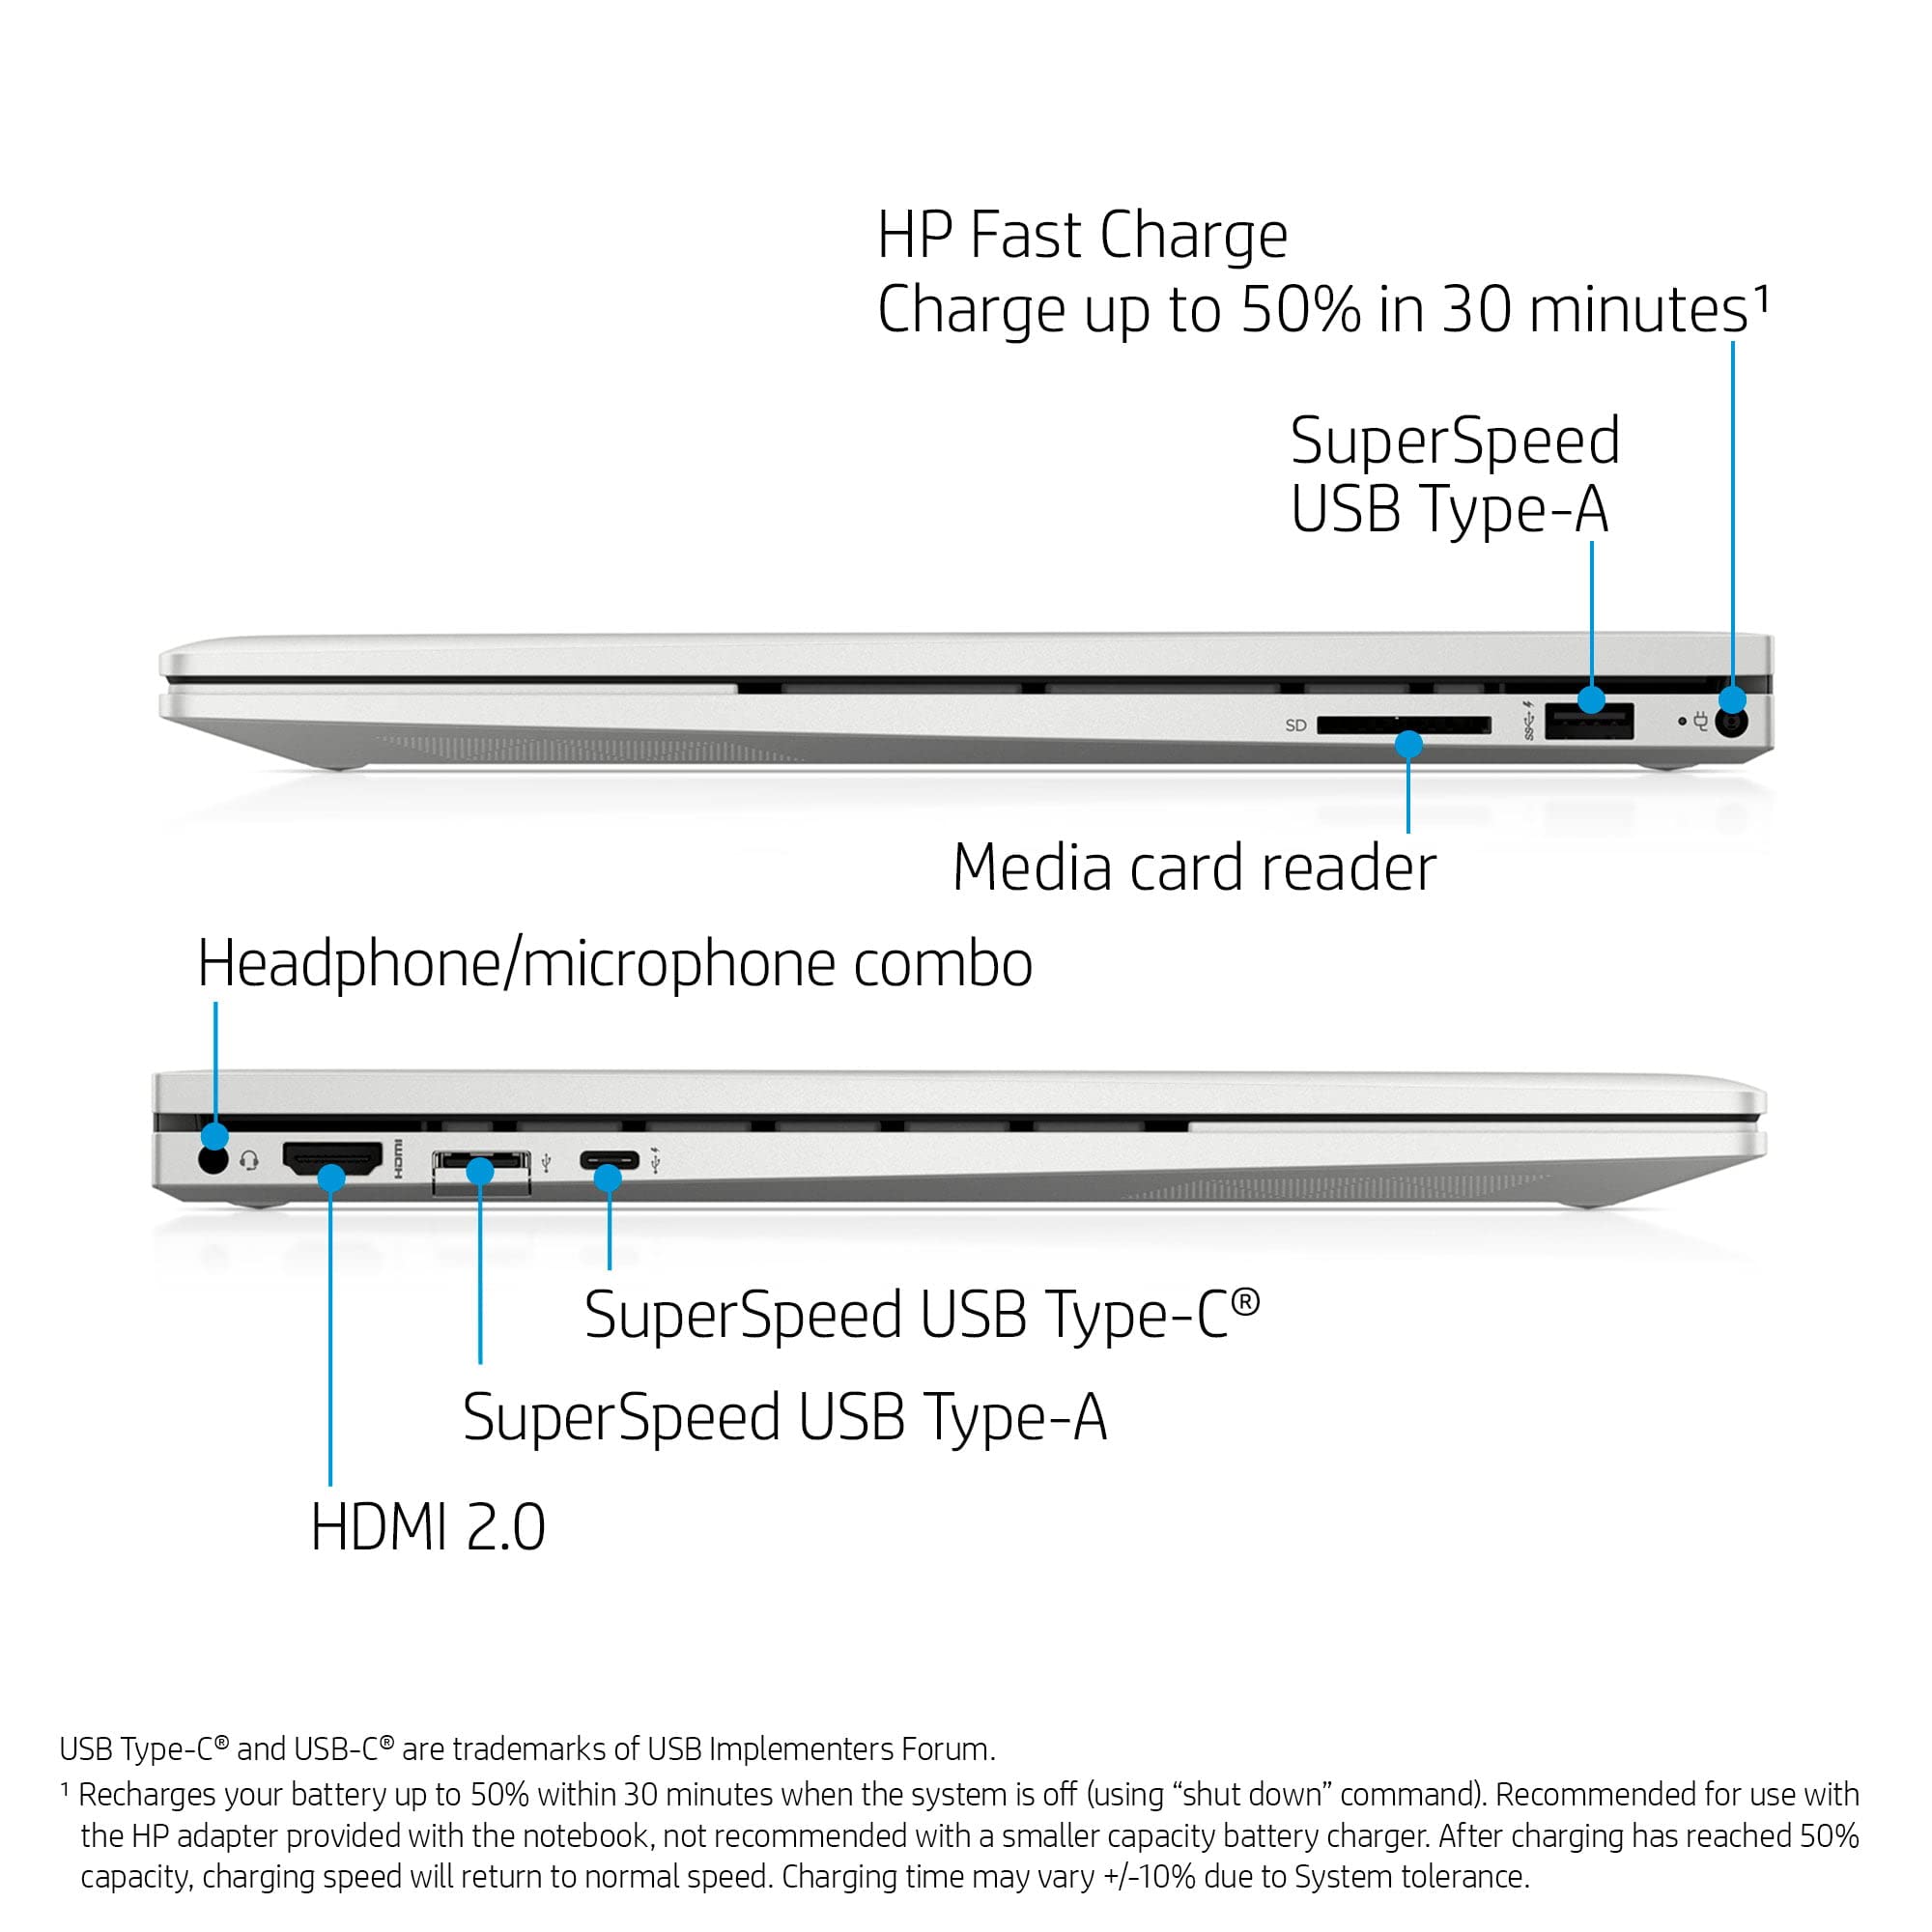 HP Newest Envy x360 Convert 15.6" FHD IPS Touchscreen Premium 2-in-1 Laptop, 11th Gen Intel Quad-Core i5-1135G7, 8GB RAM, 2TB PCIe SSD, Backlit Keyboard, Fingerprint, Windows 10 Home + HDMI Cable